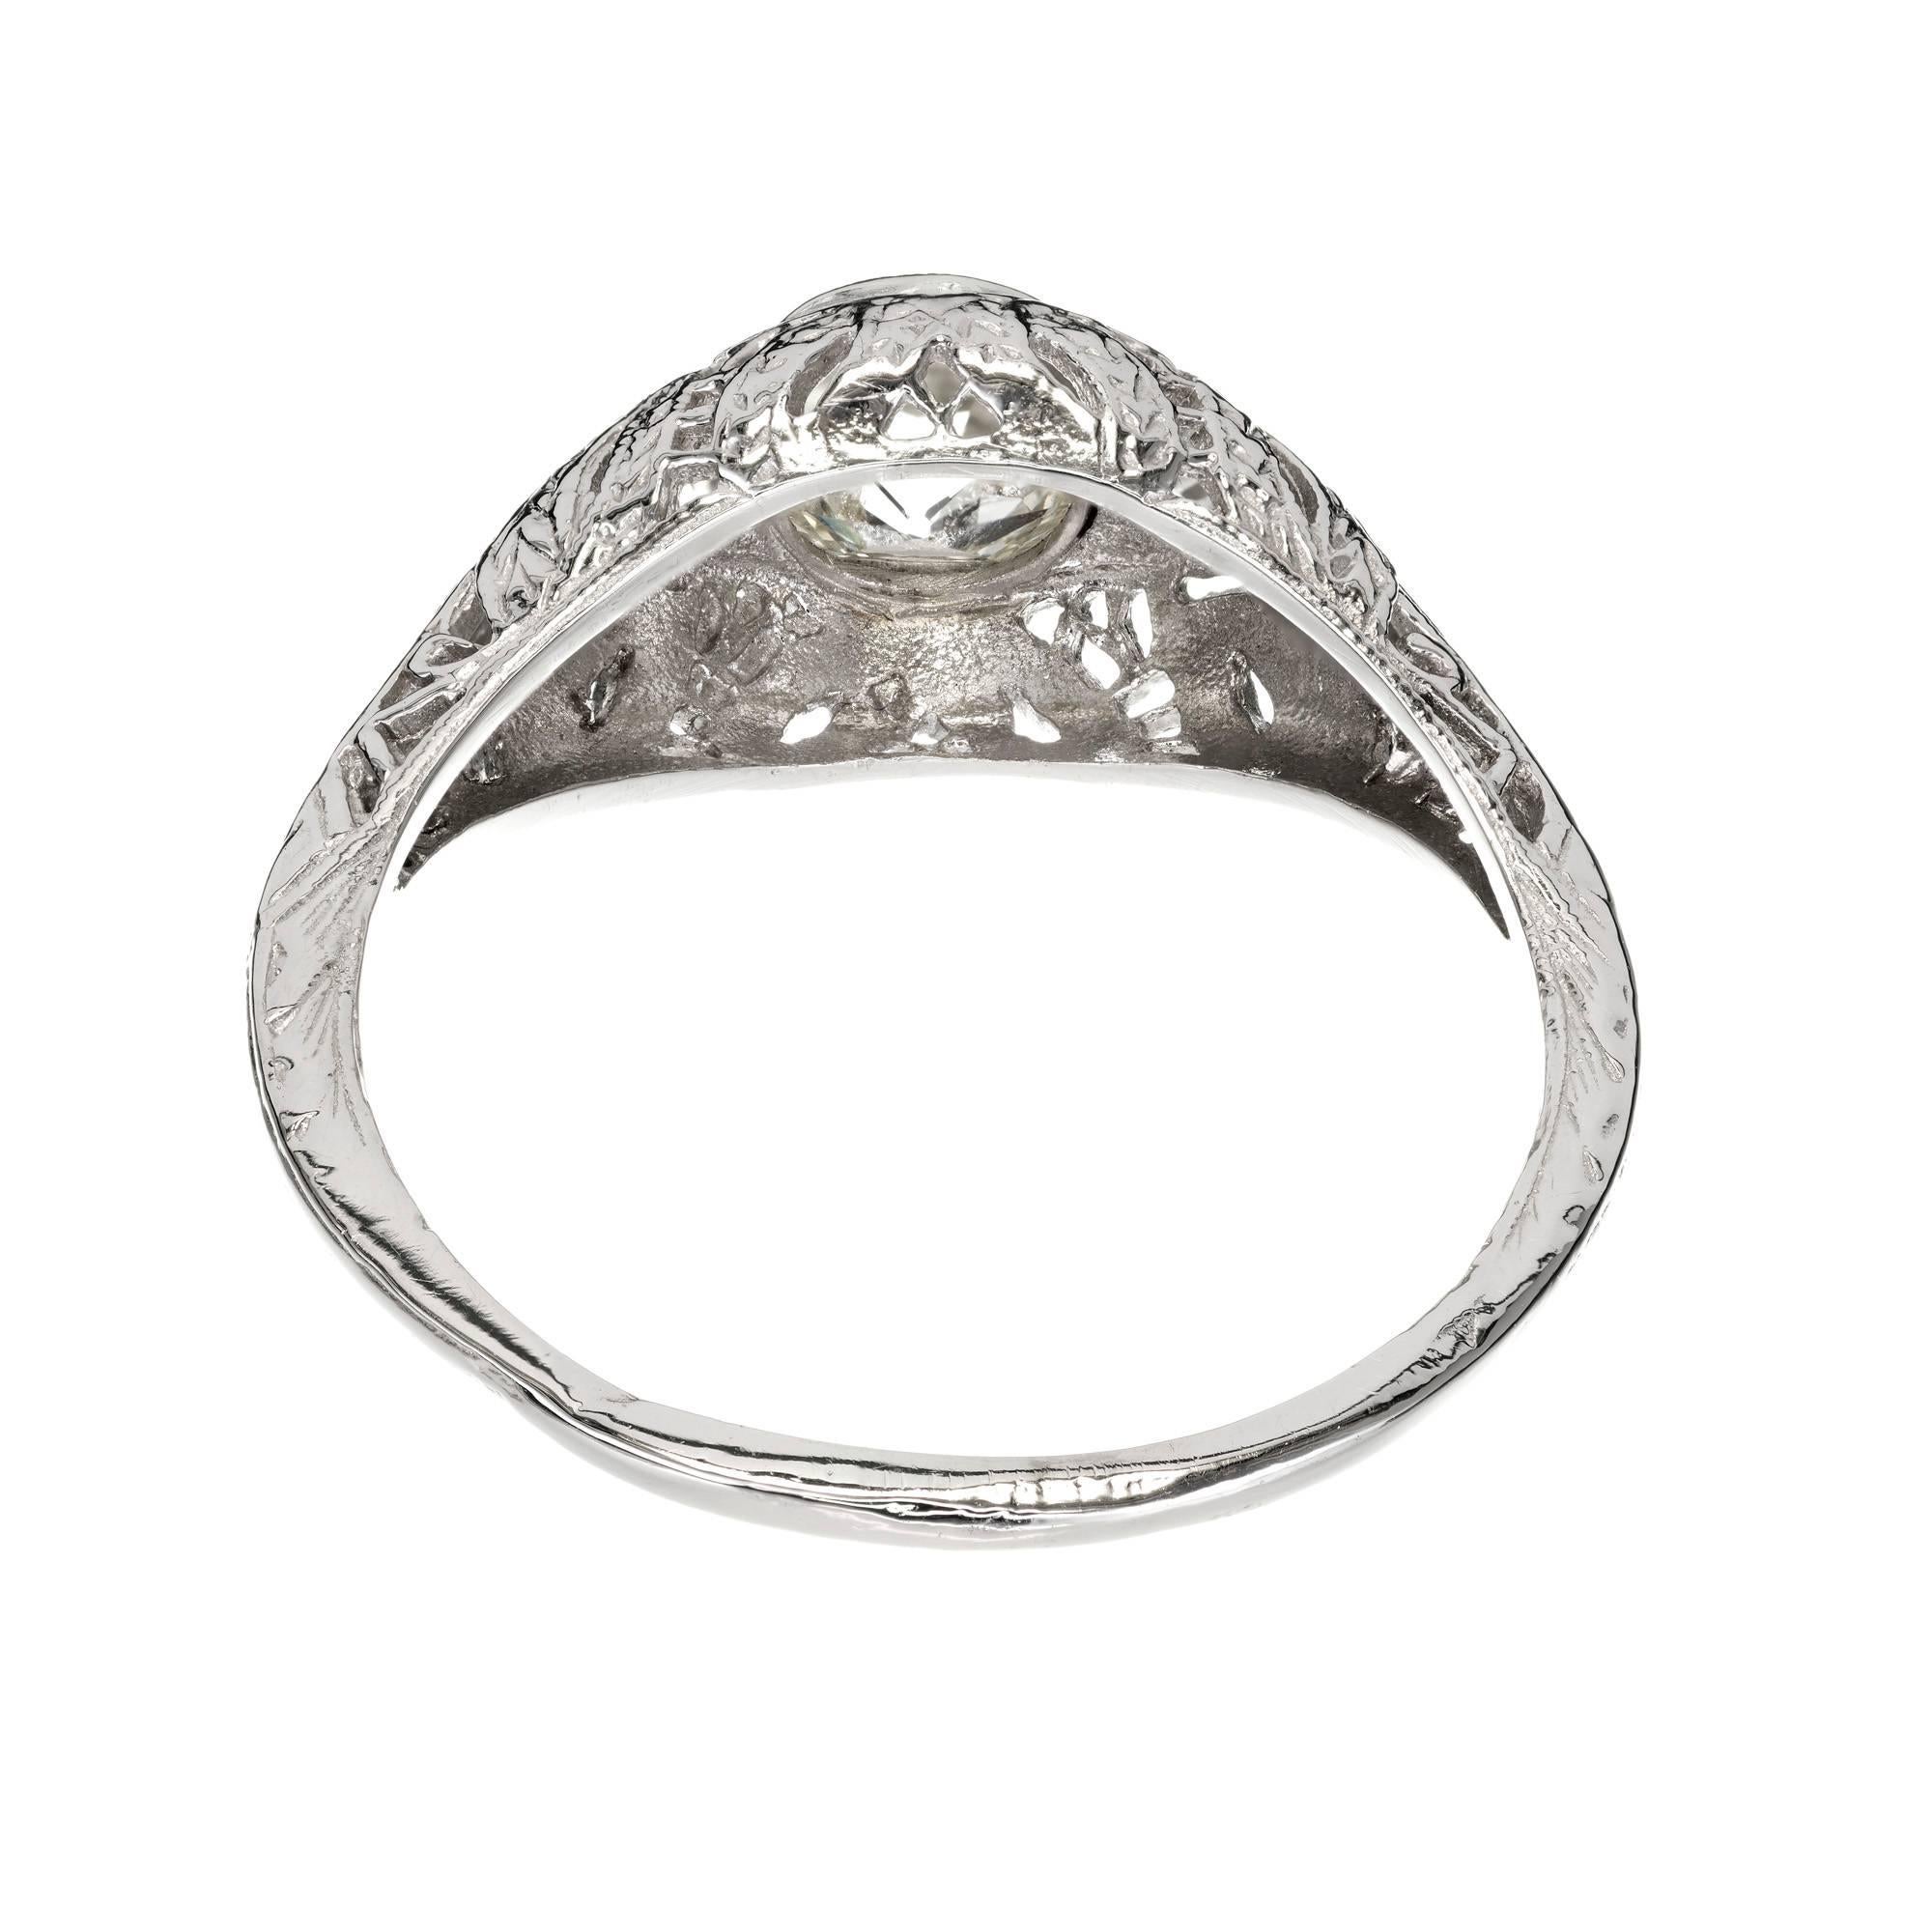 1890s ring